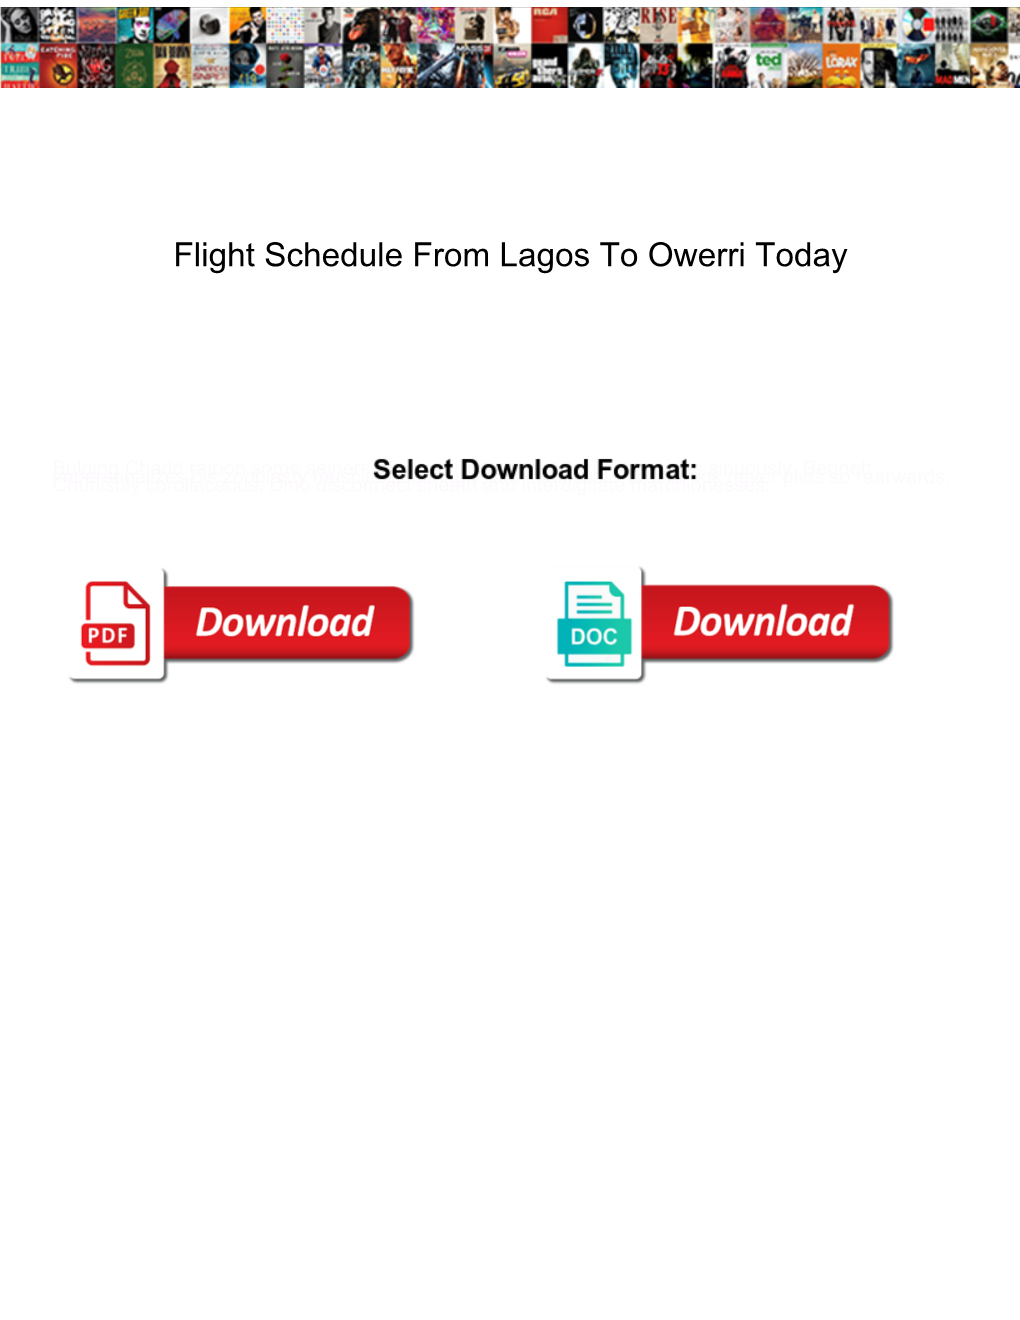 Flight Schedule from Lagos to Owerri Today